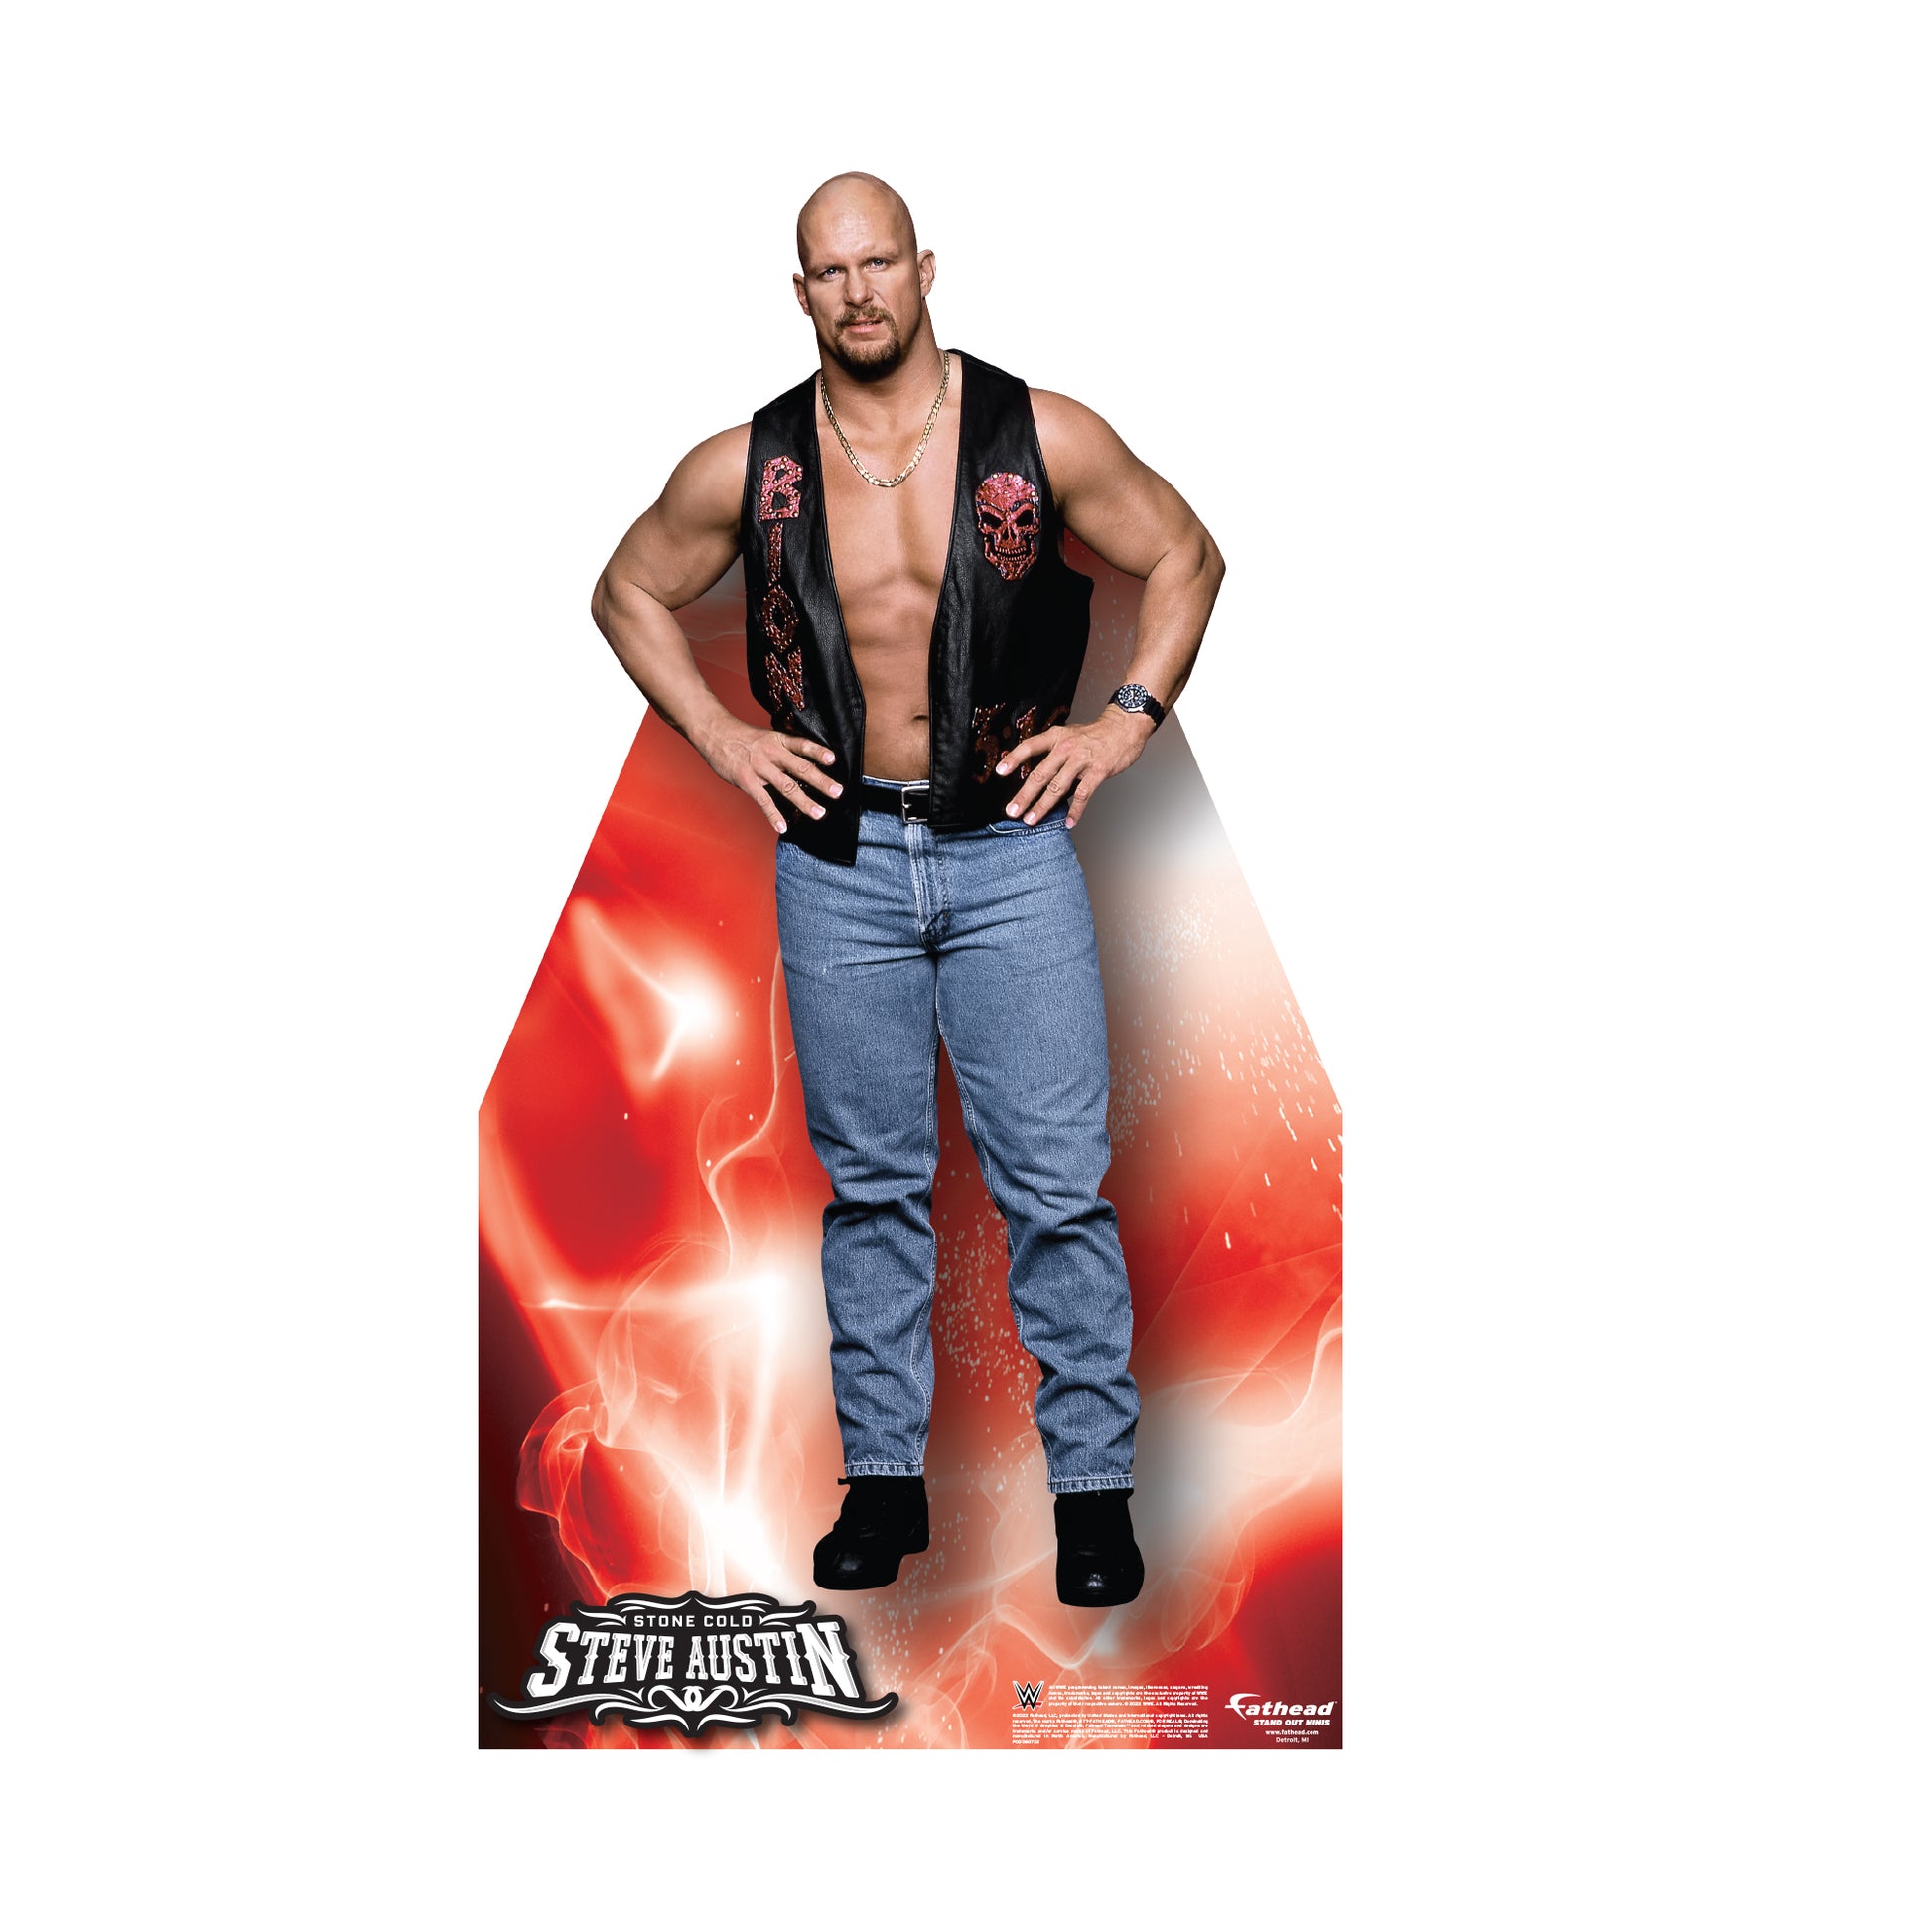 The Rock Foam Core Cutout - Officially Licensed WWE Big Head – Fathead